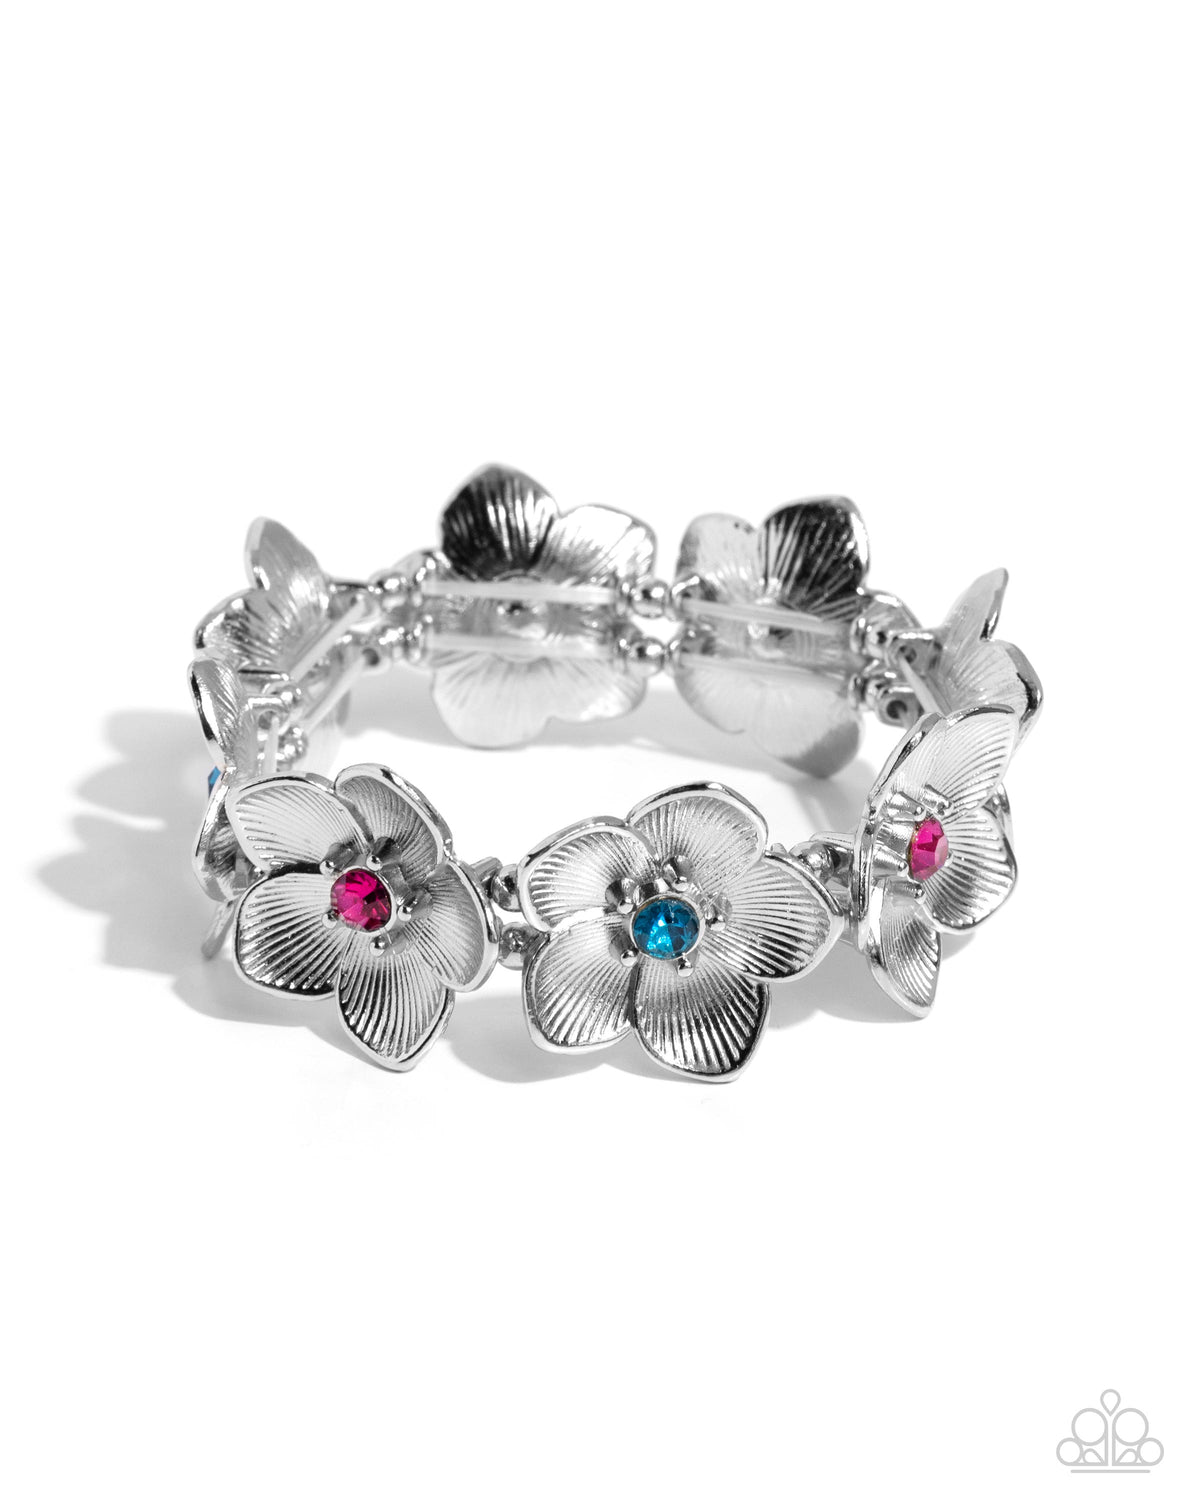 General Grandeur Blue Gem &amp; Silver Flower Bracelet - Paparazzi Accessories- lightbox - CarasShop.com - $5 Jewelry by Cara Jewels